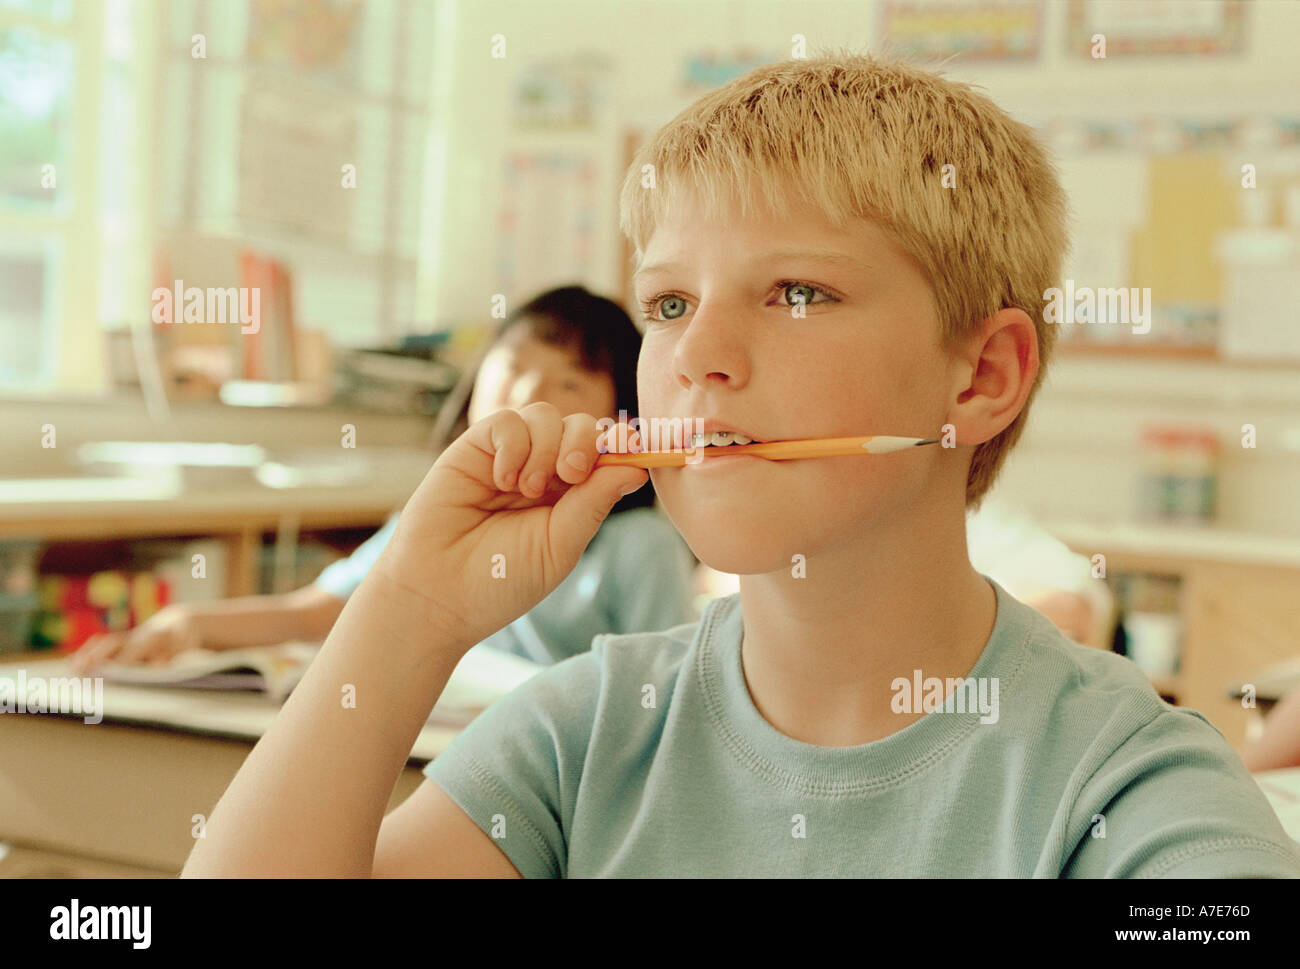 Boy chewing pencil in school classroom Stock Photo